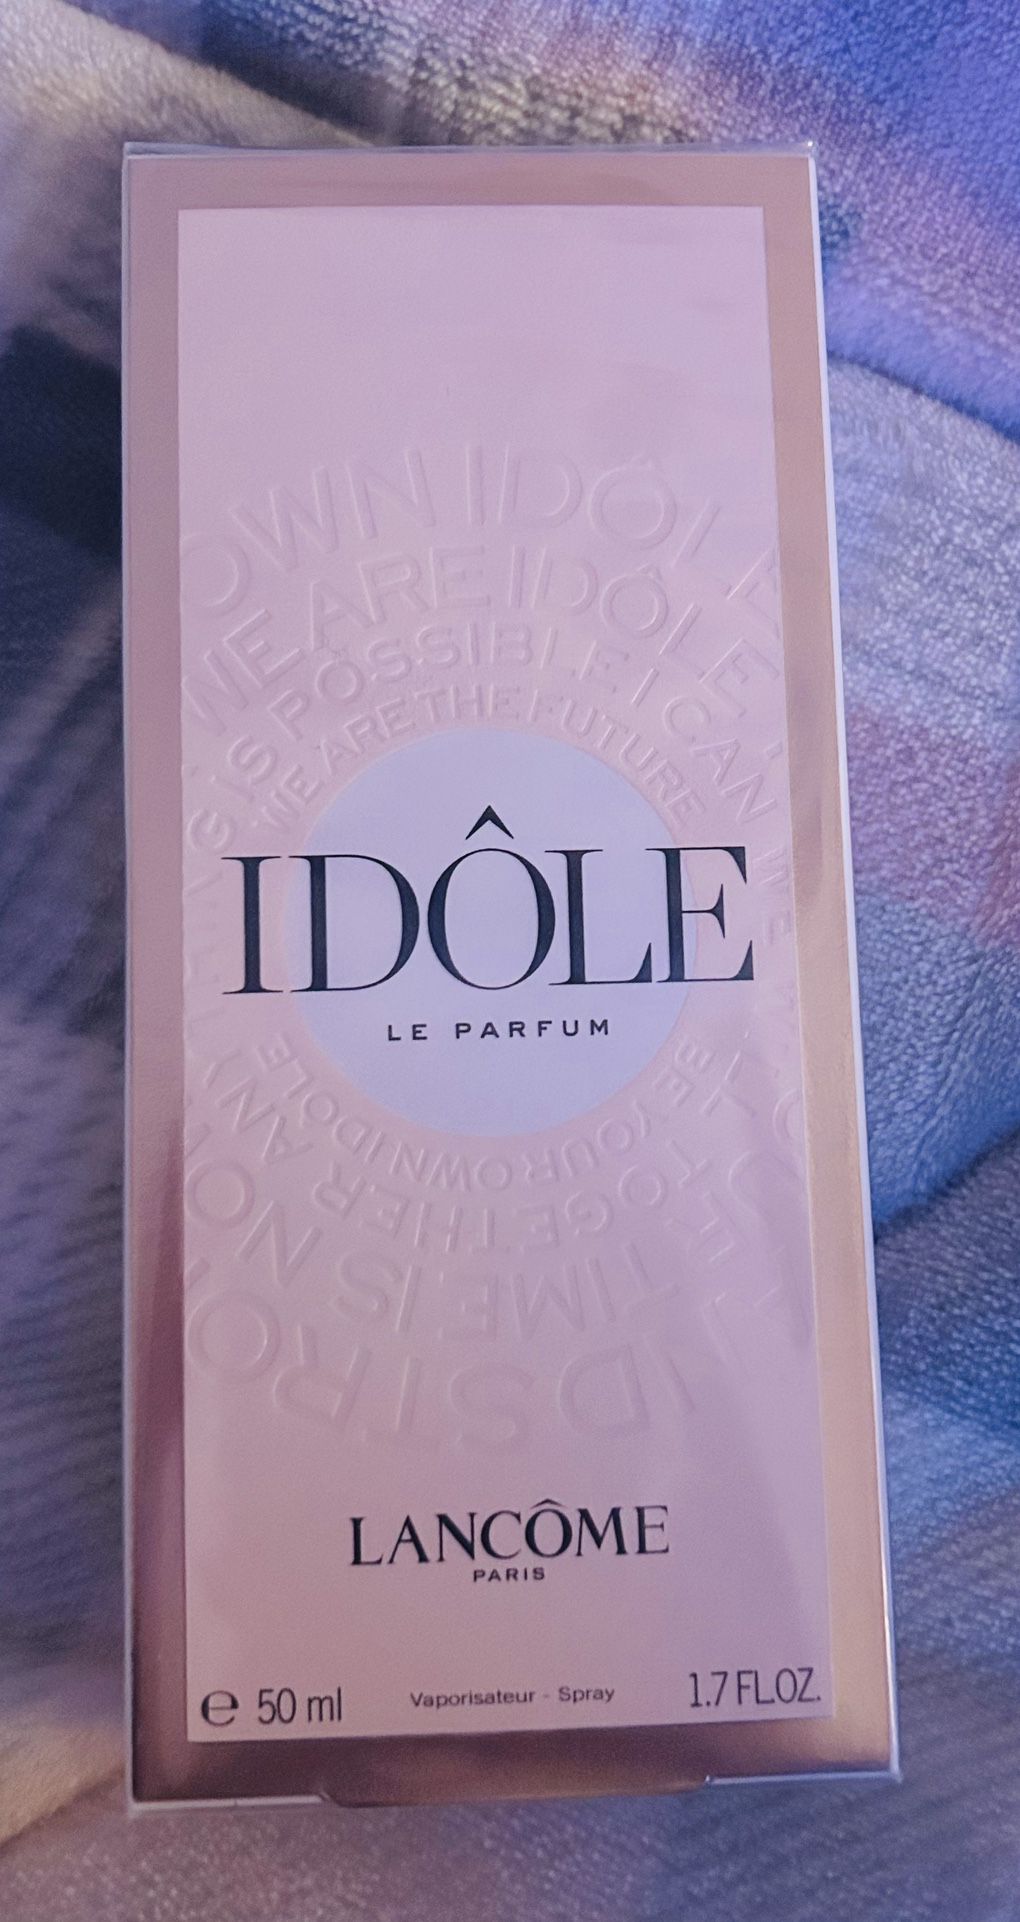 Unopened Lancôme Idole Perfume 1.7 oz